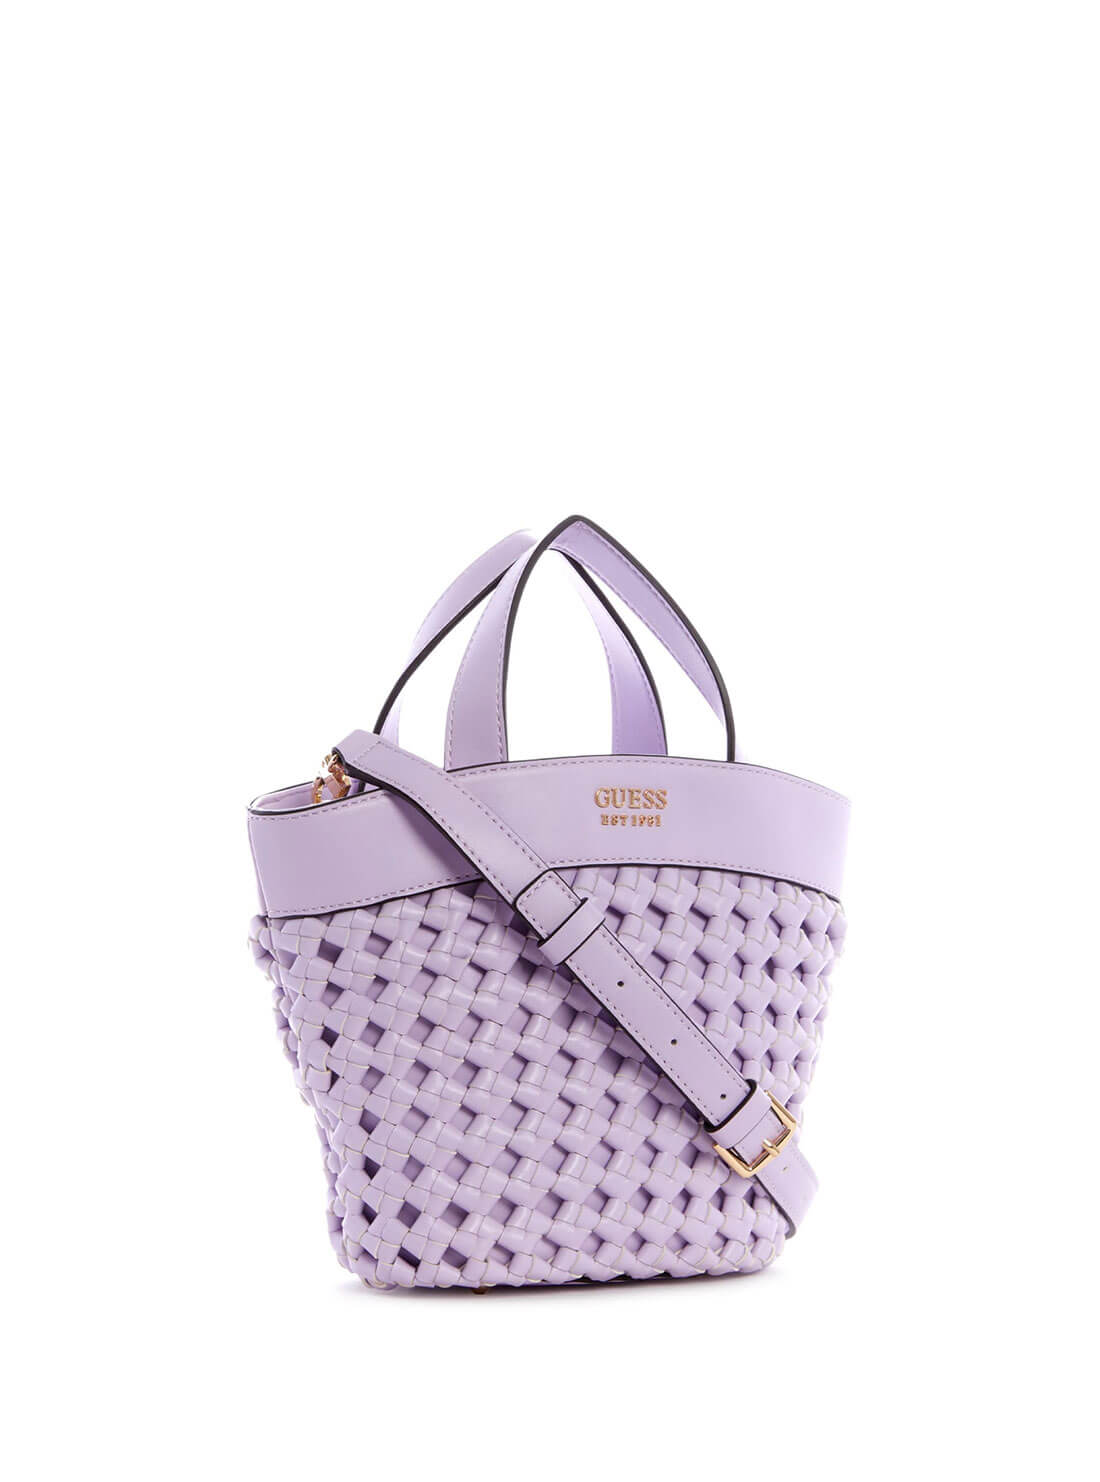 GUESS Womens Lilac Sicilia Mini Tote Bag WG849075 Side View